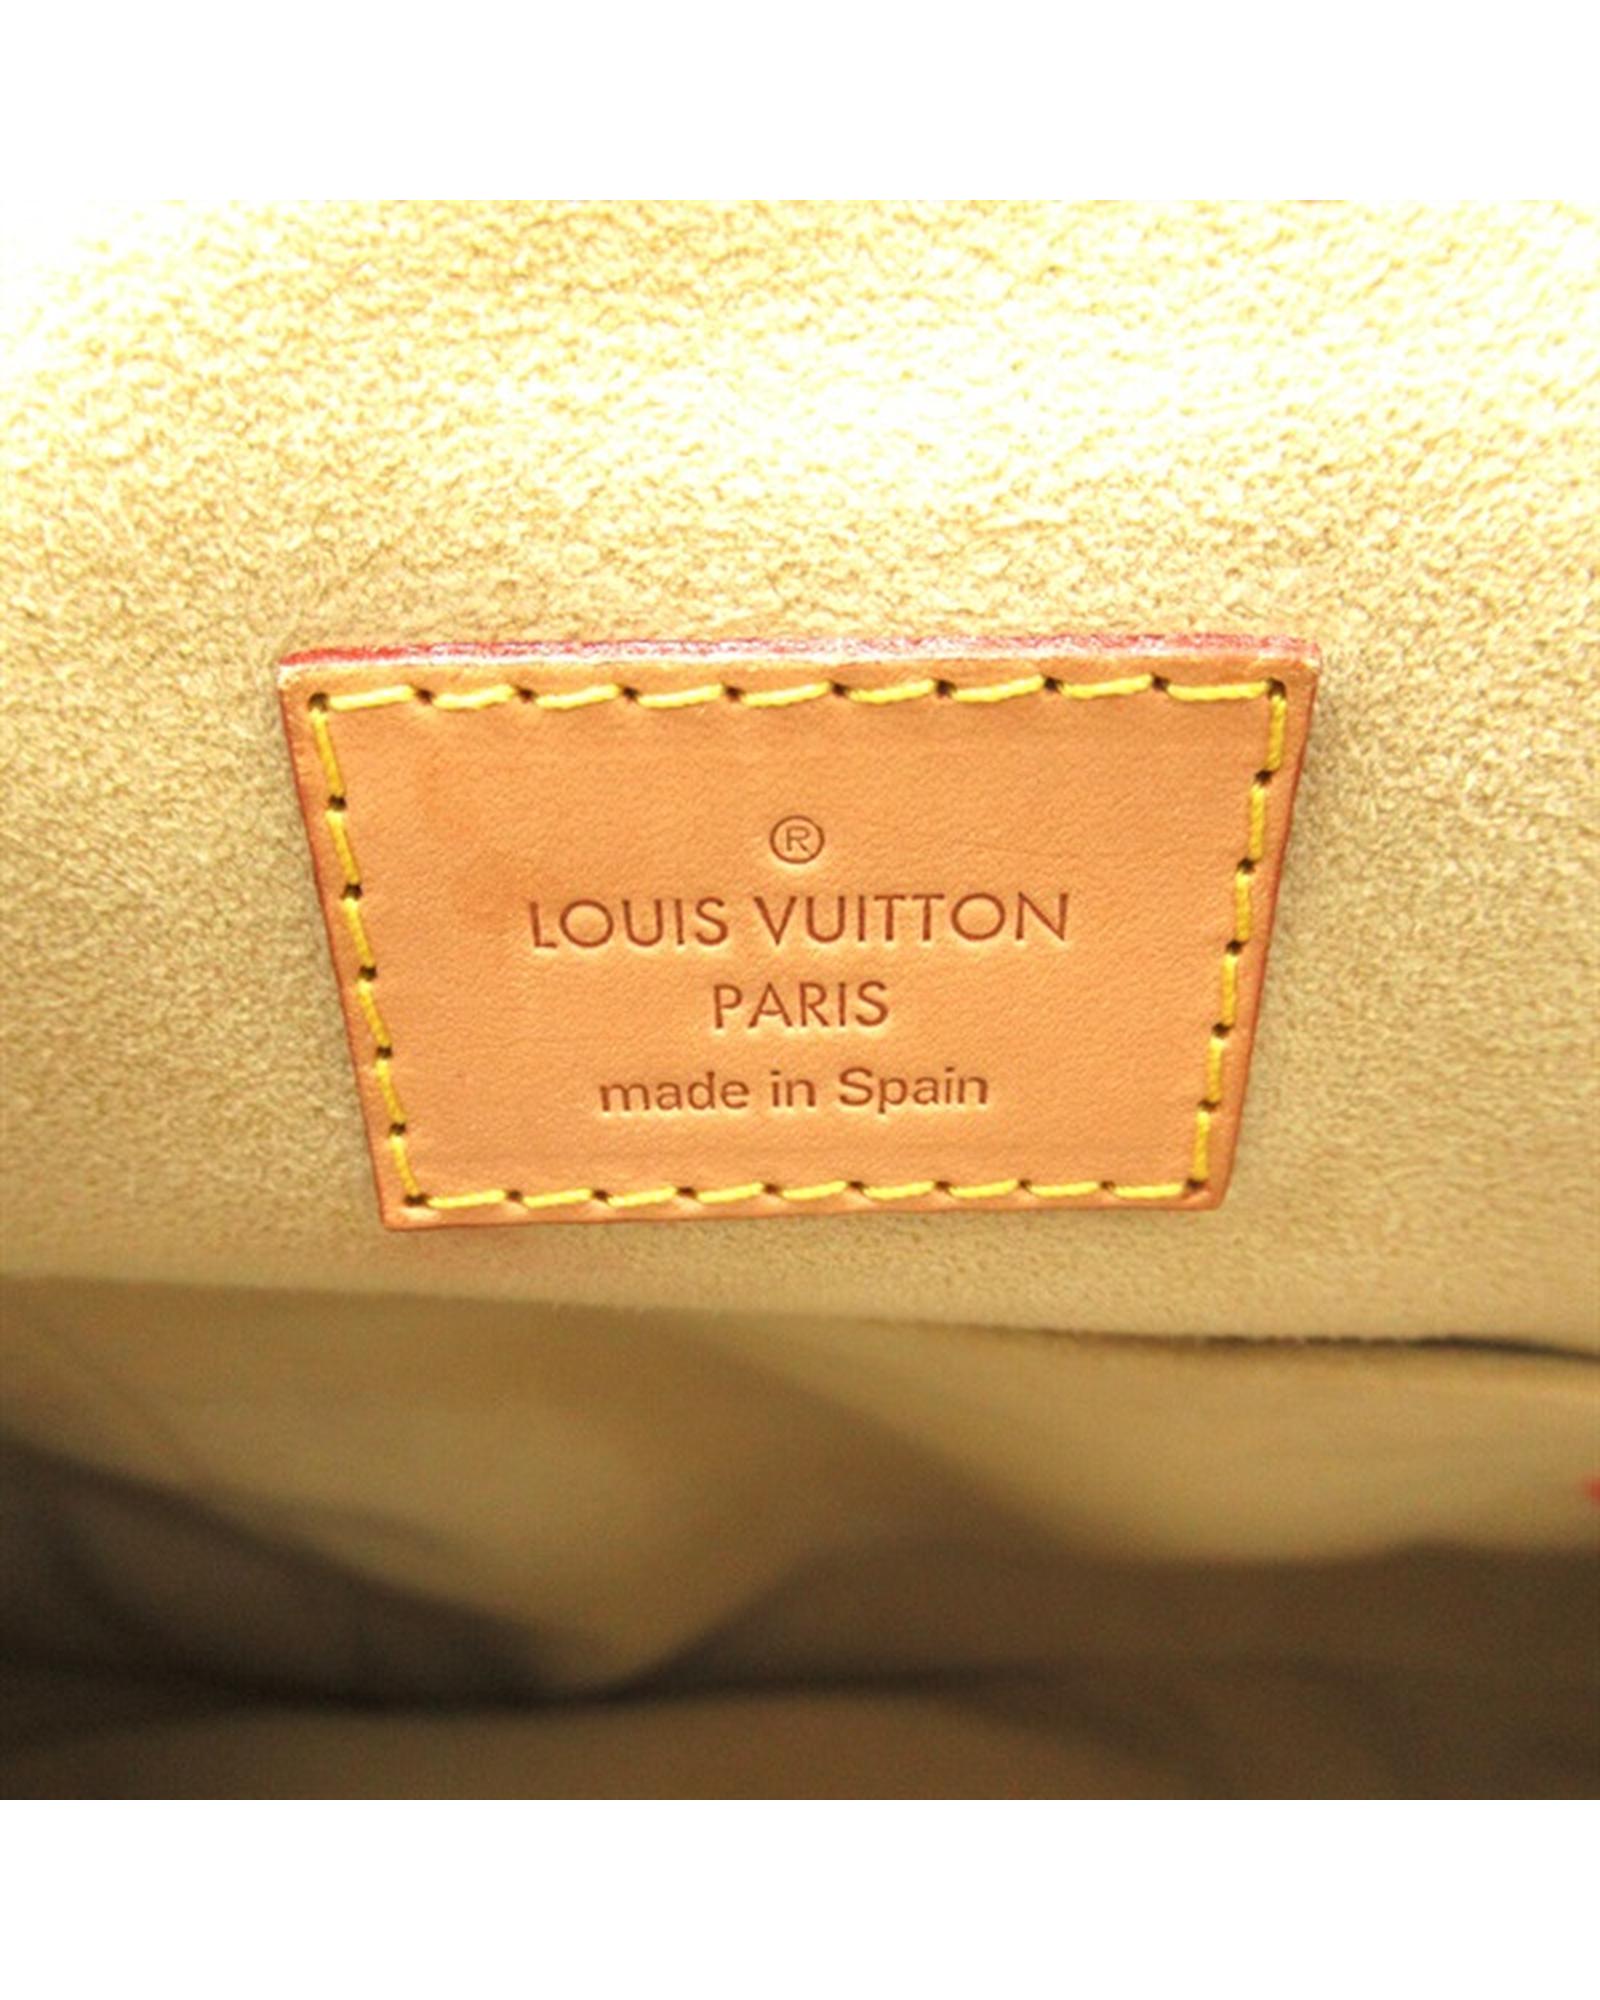 Pre Loved Louis Vuitton Monogram Artsy MM Bag in Excellent Condition ...